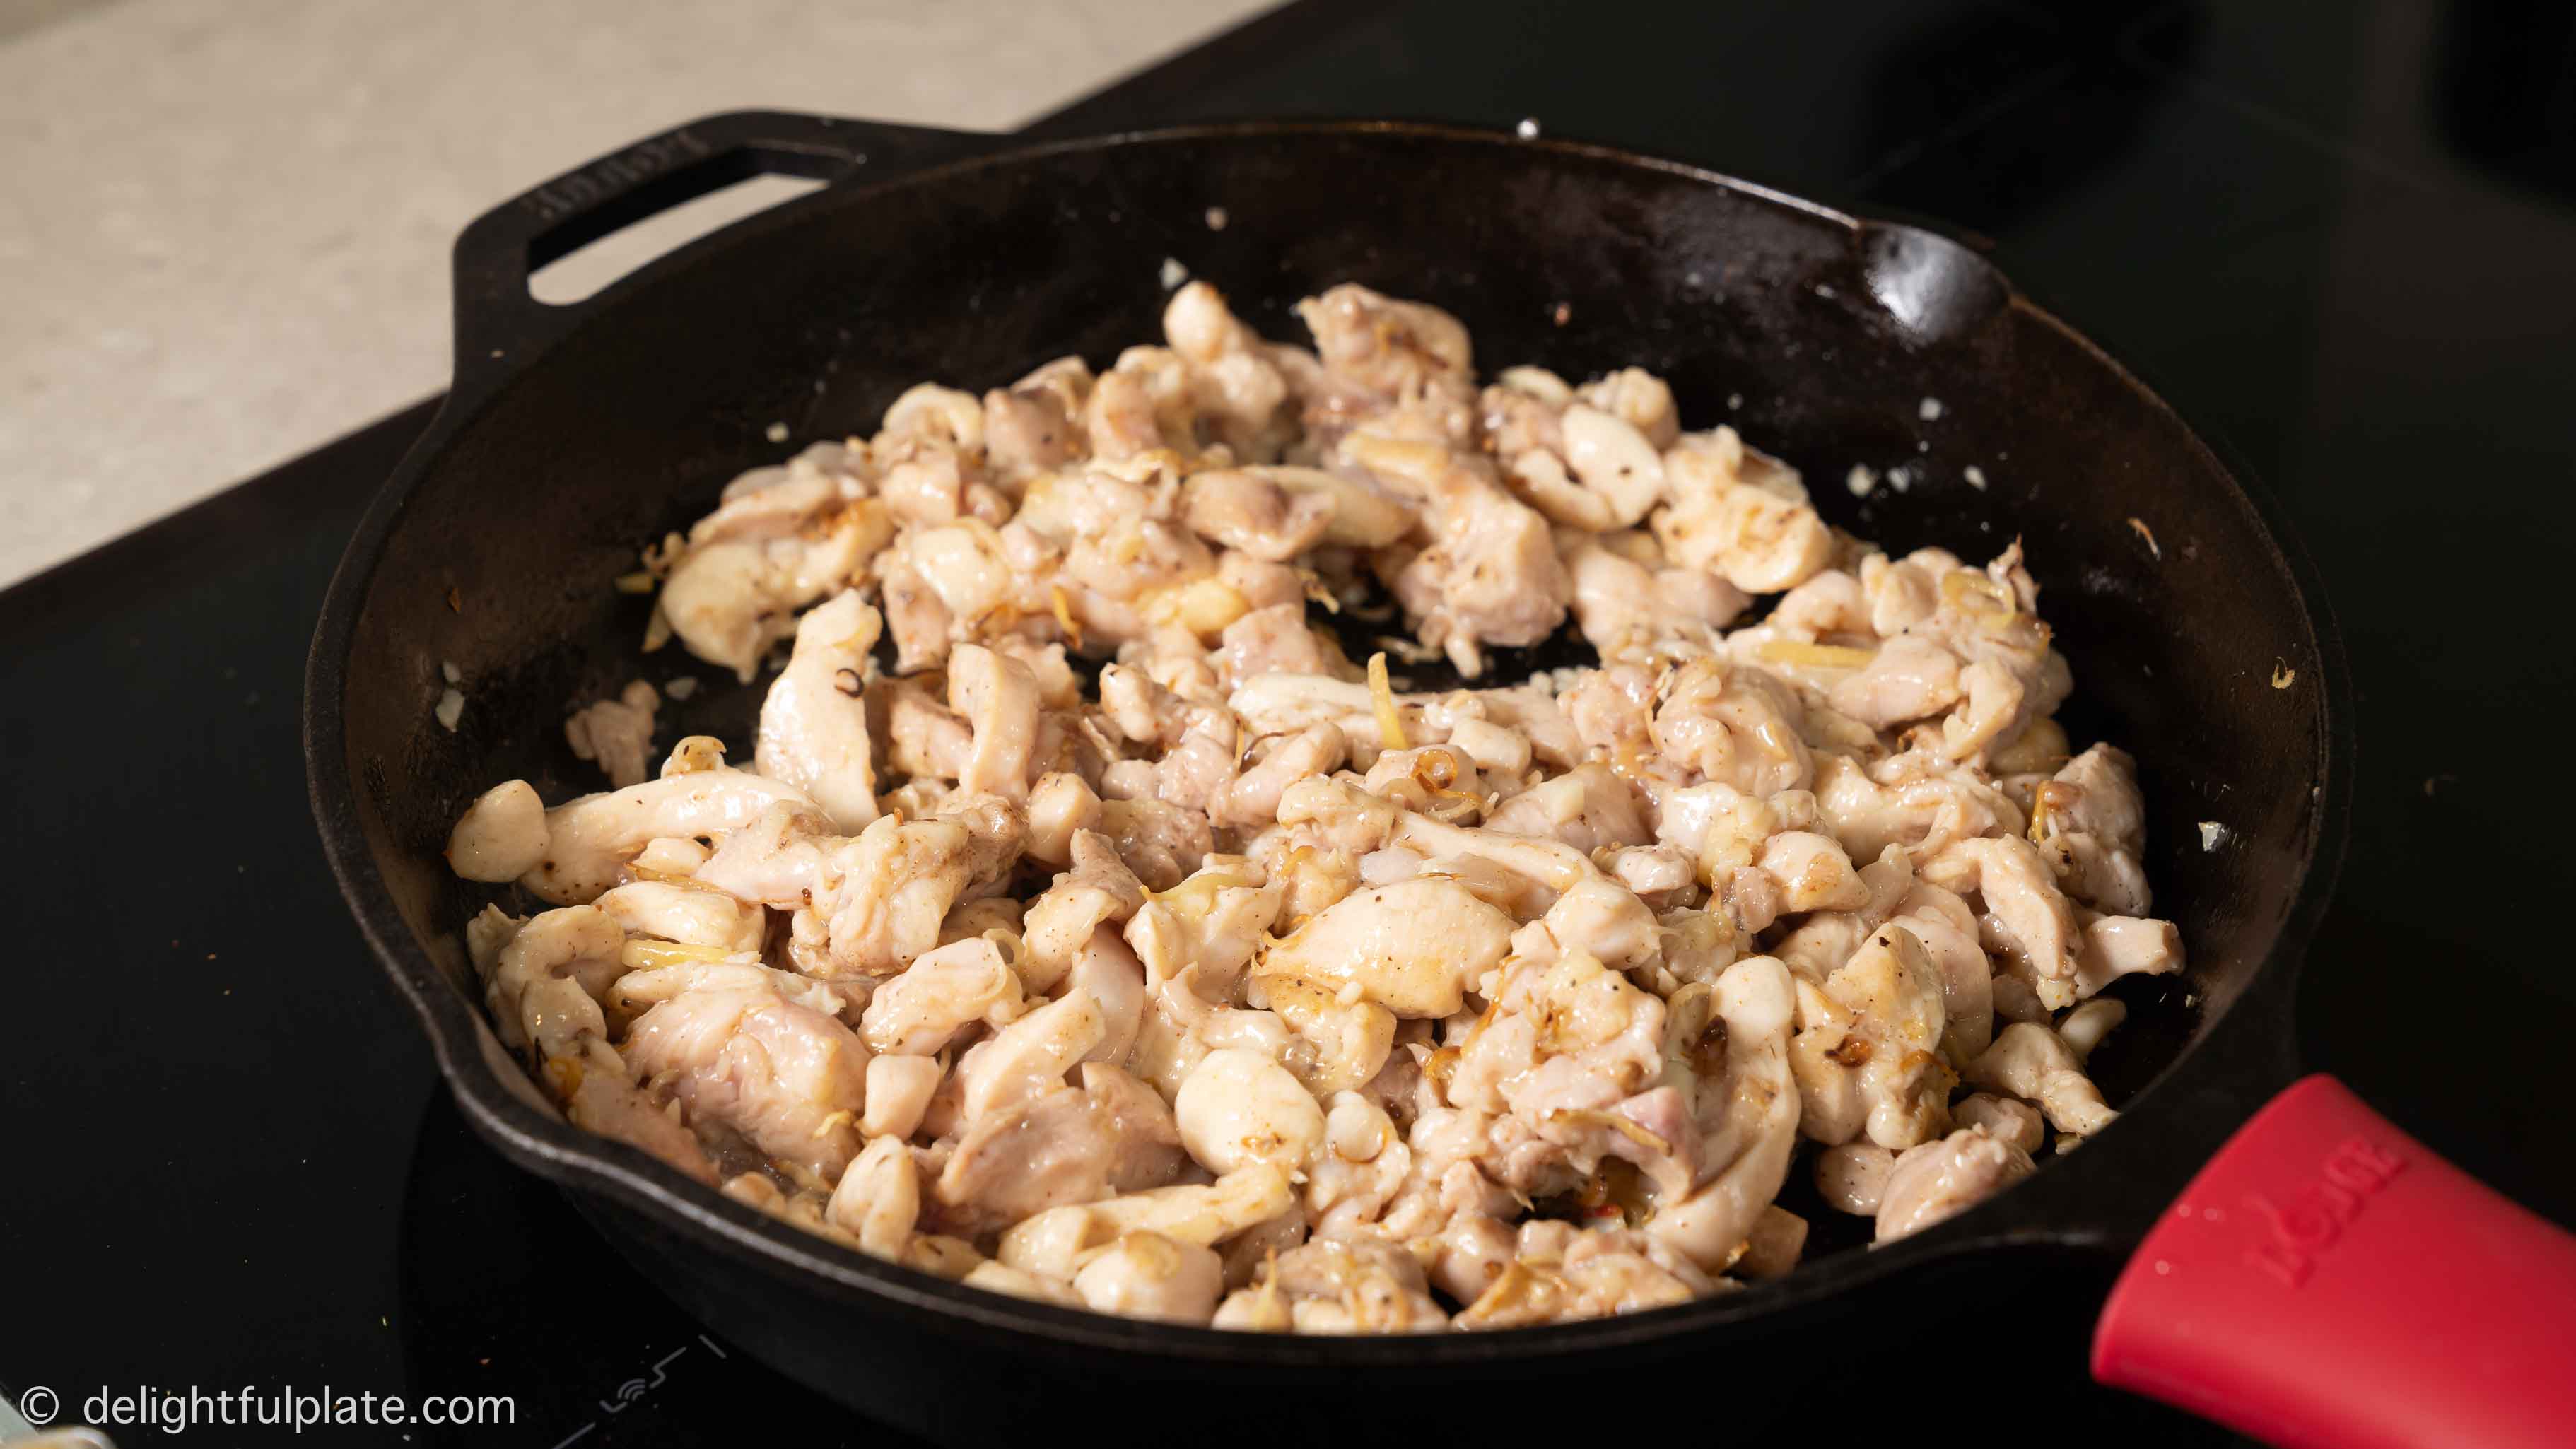 stir-fry chicken in the pan